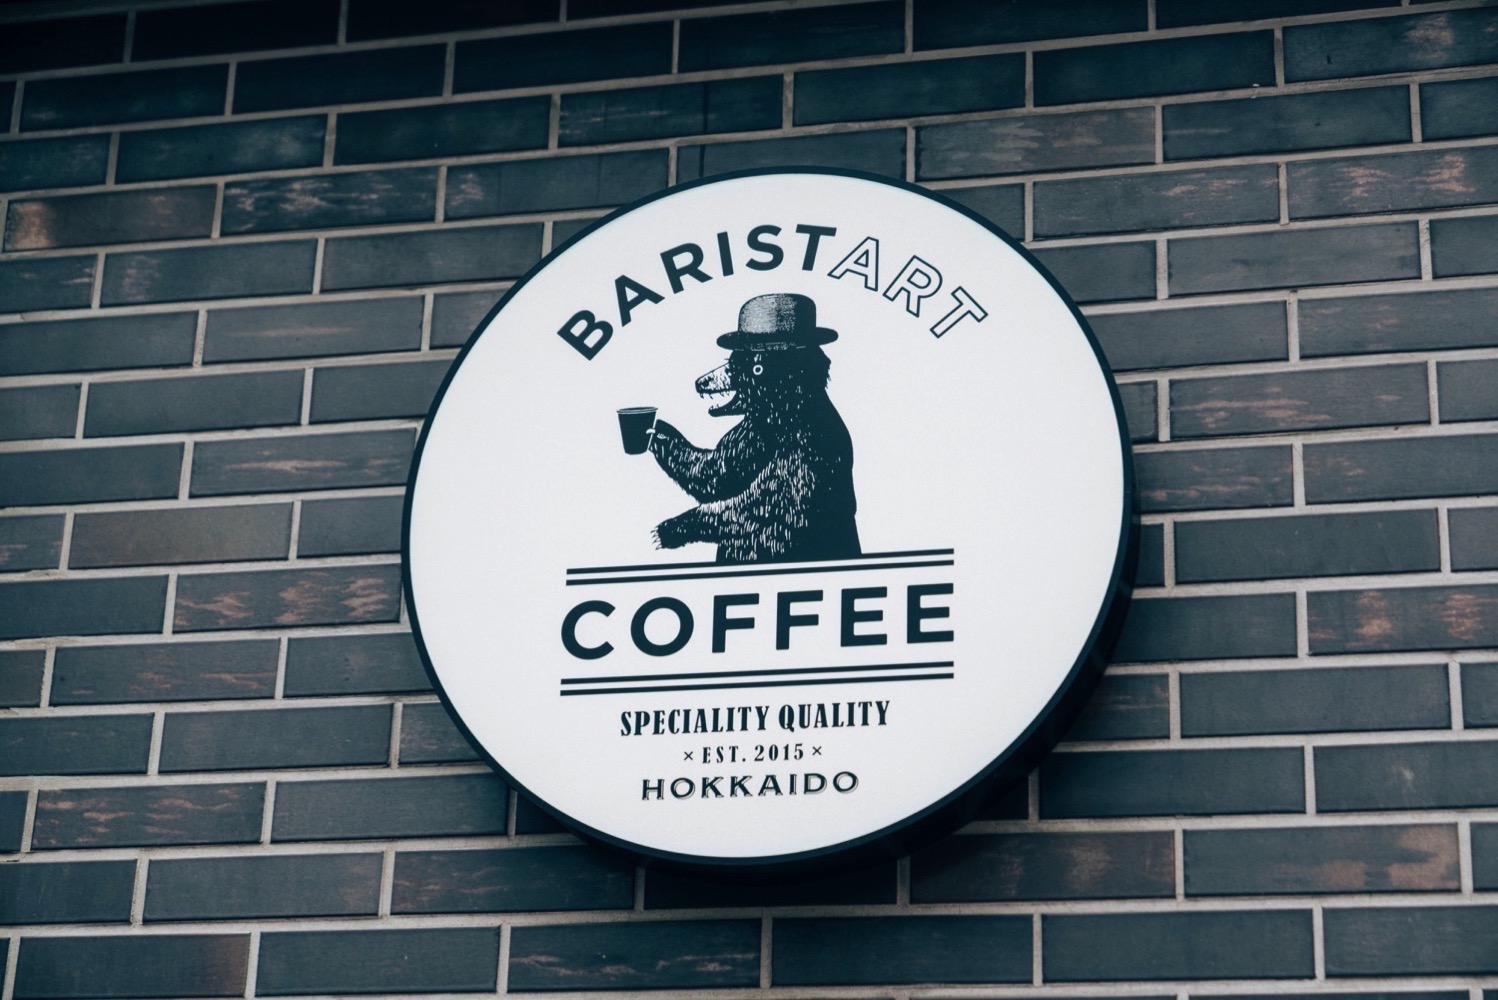 Baristart coffee sapporo 3